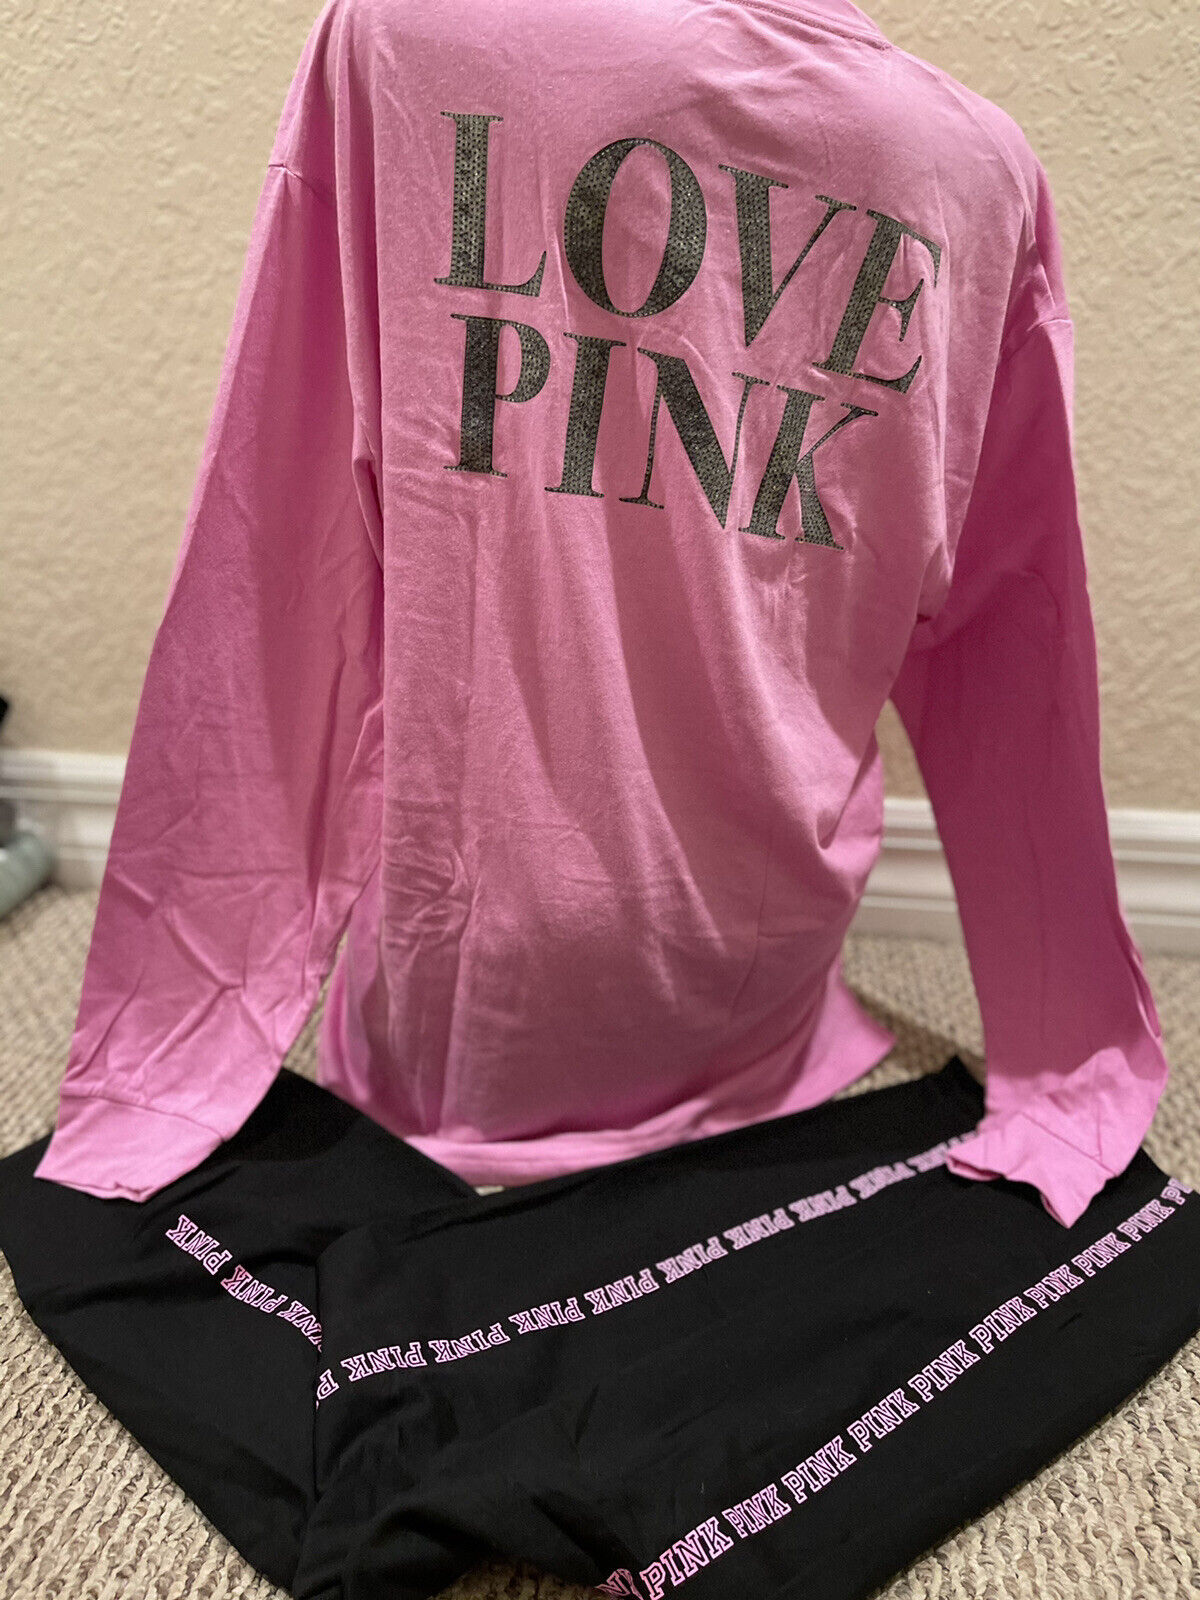 Victoria's Secret Pink Bling Campus Tee Shirt + Leggings Set